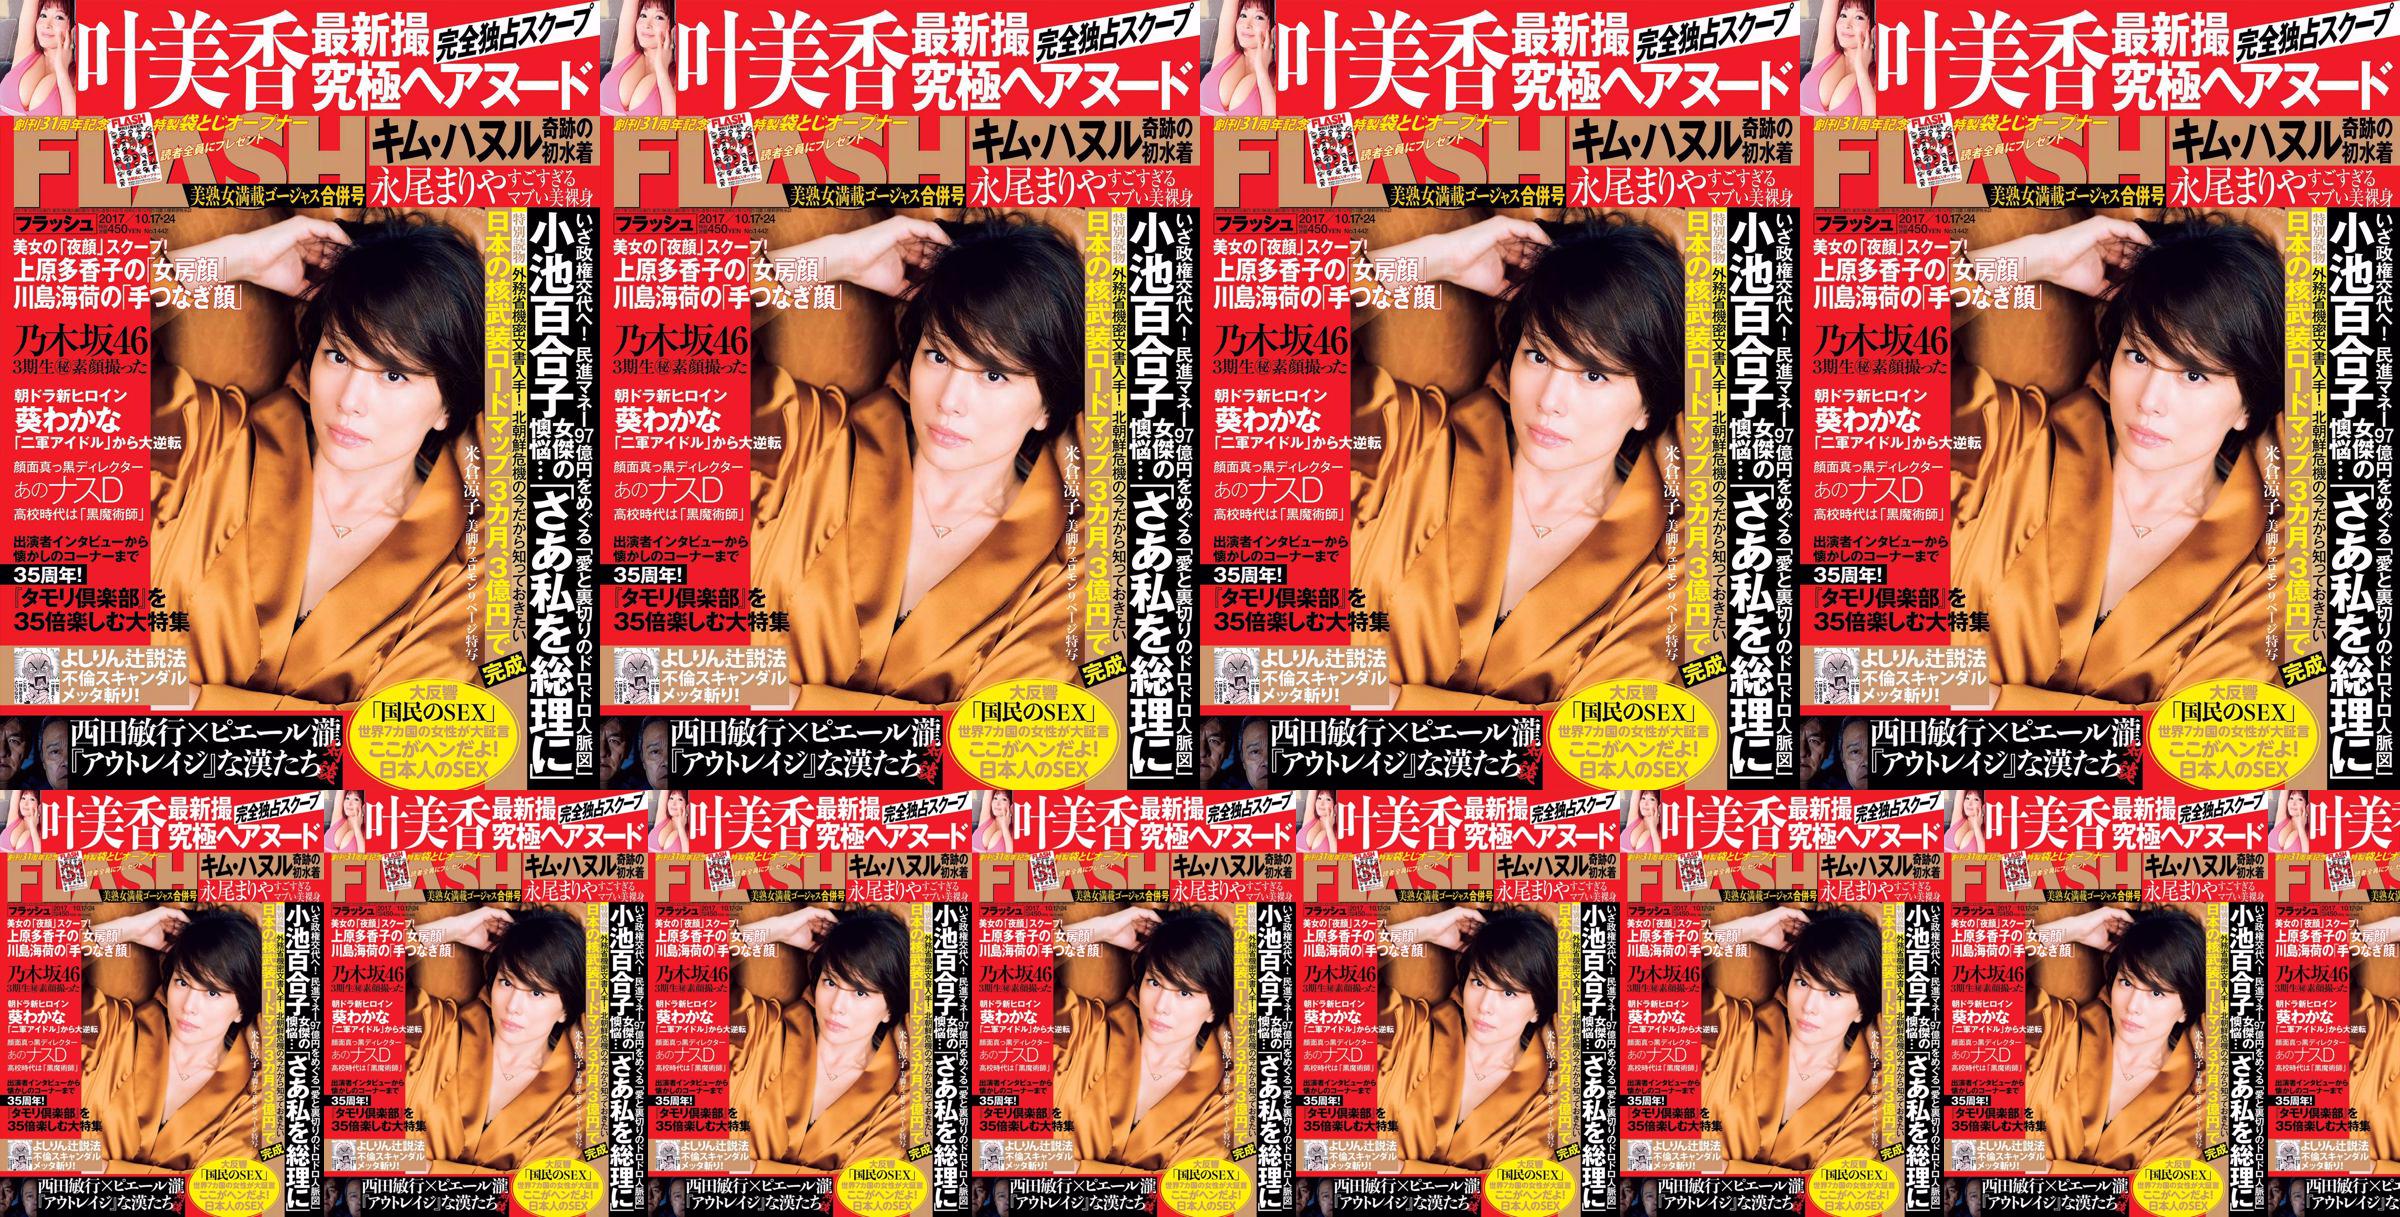 [FLASH] Yonekura Ryoko Ye Meixiang Tachibana Flower Rin Nagao Rika 2017.10.17-24 นิตยสารภาพถ่าย No.9a72e6 หน้า 1